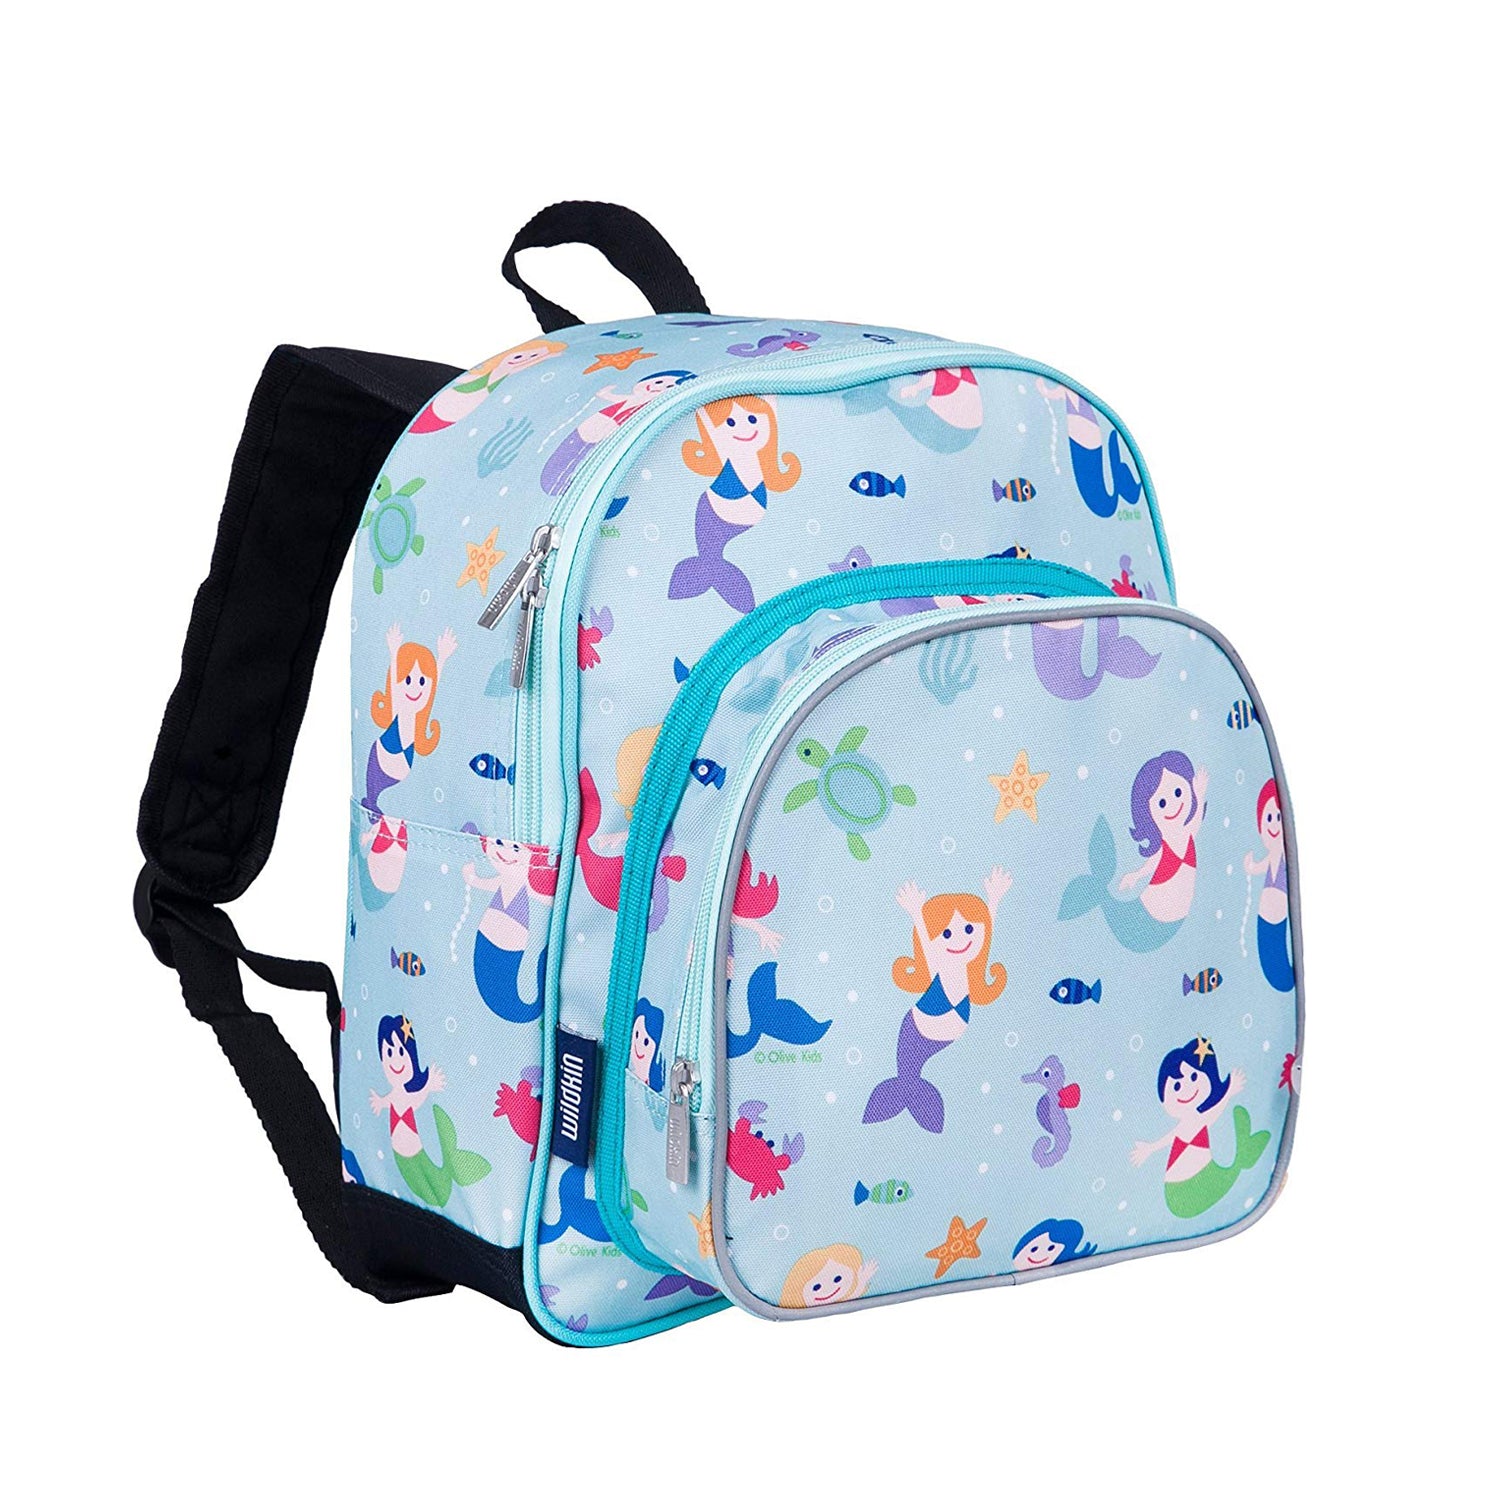 Mermaids Toddler Backpack